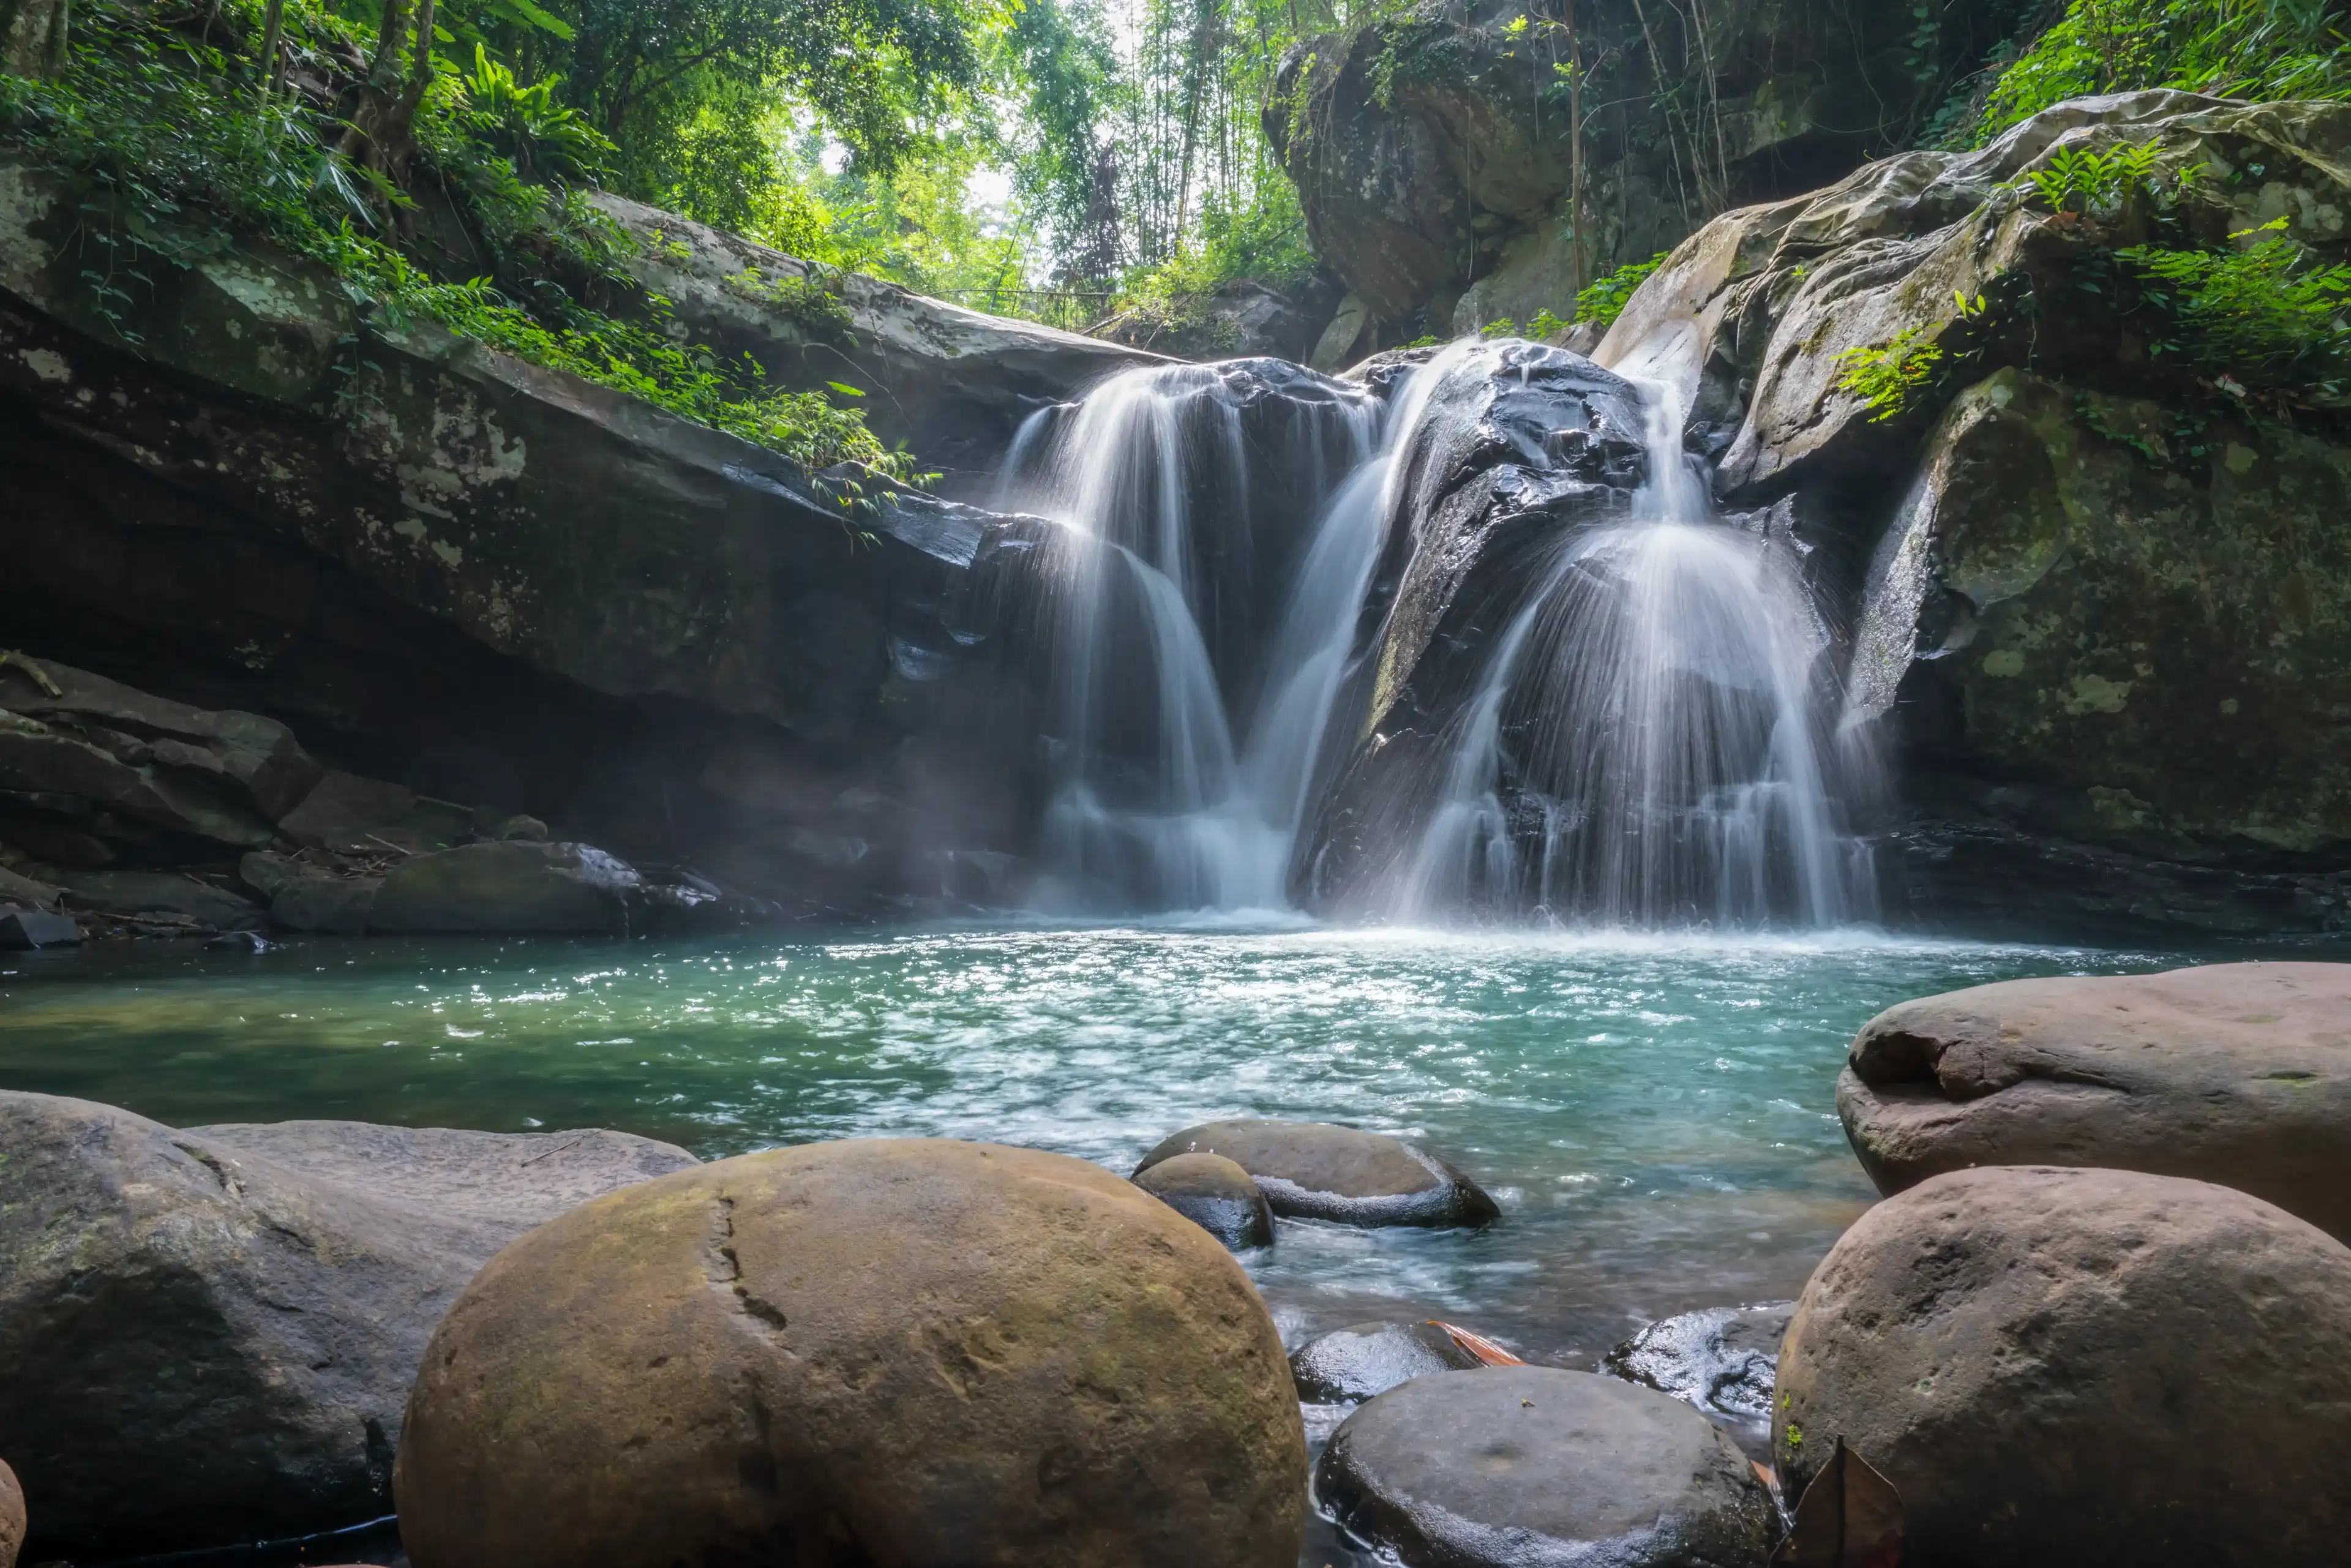 Waterfall scene at Phu Soi Dao national park in Uttaradit province Thailand.